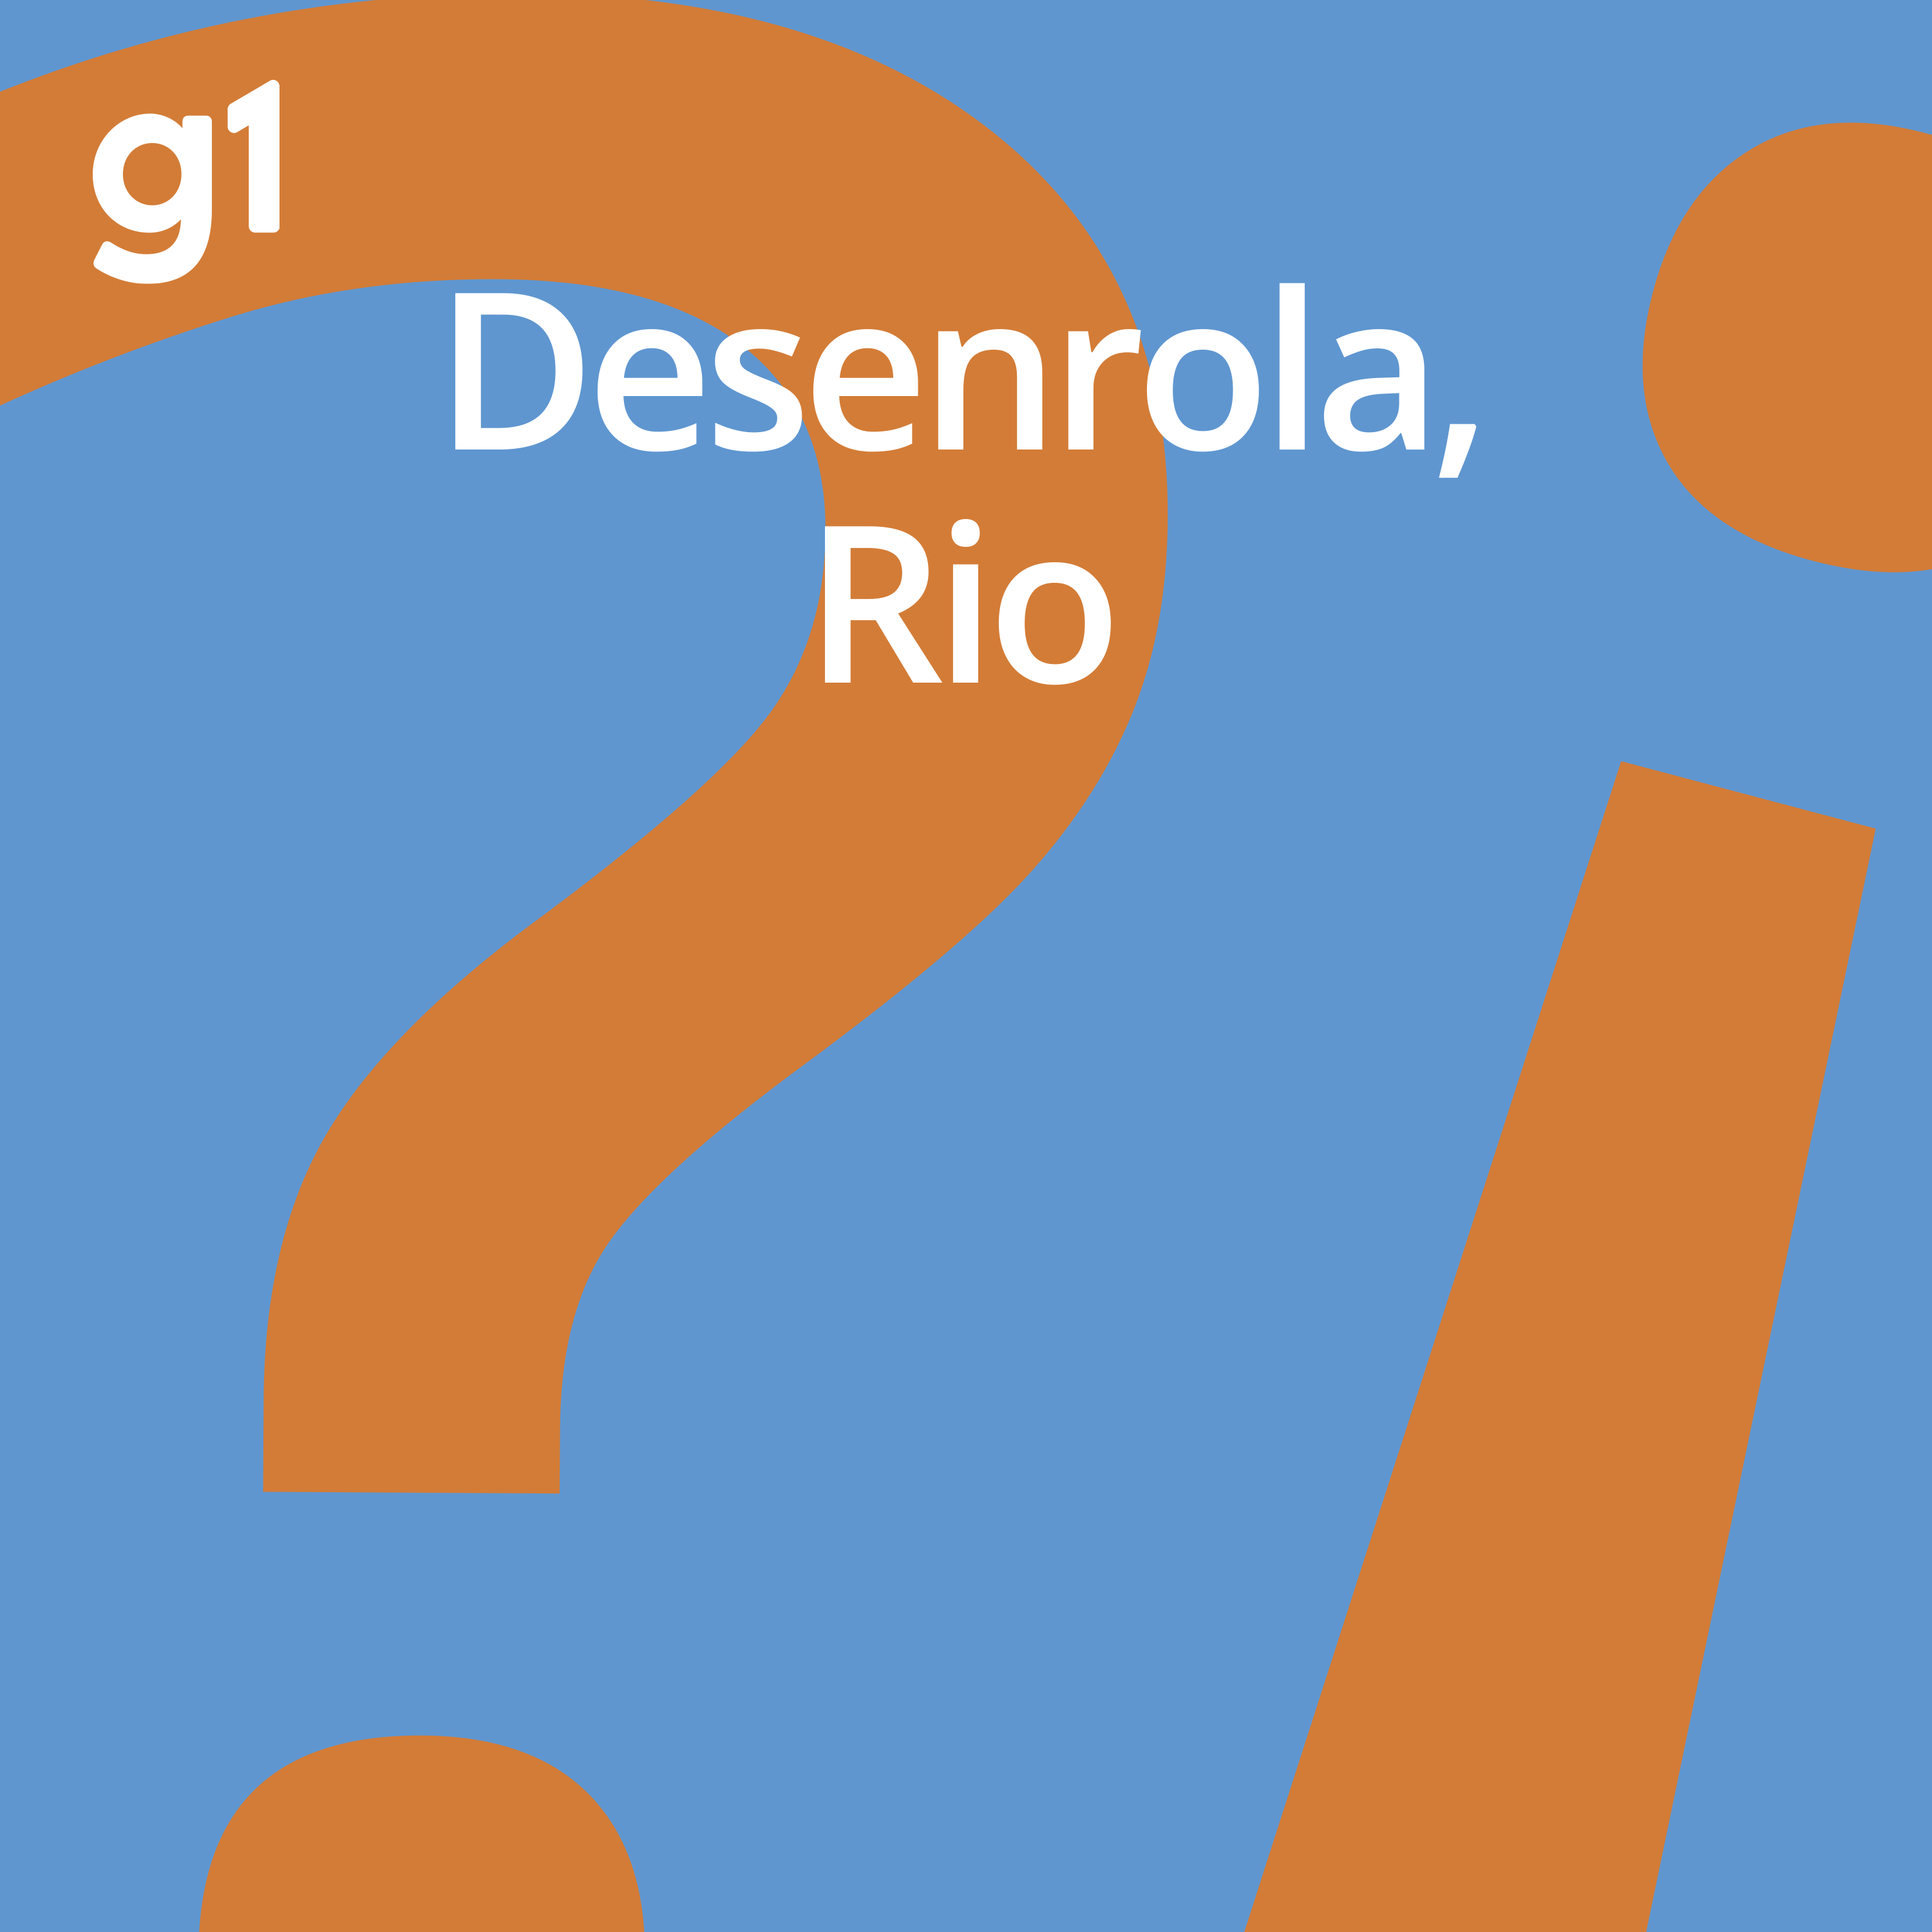 #64 Desenrola, Rio – A disputa entre Crivella e Paes